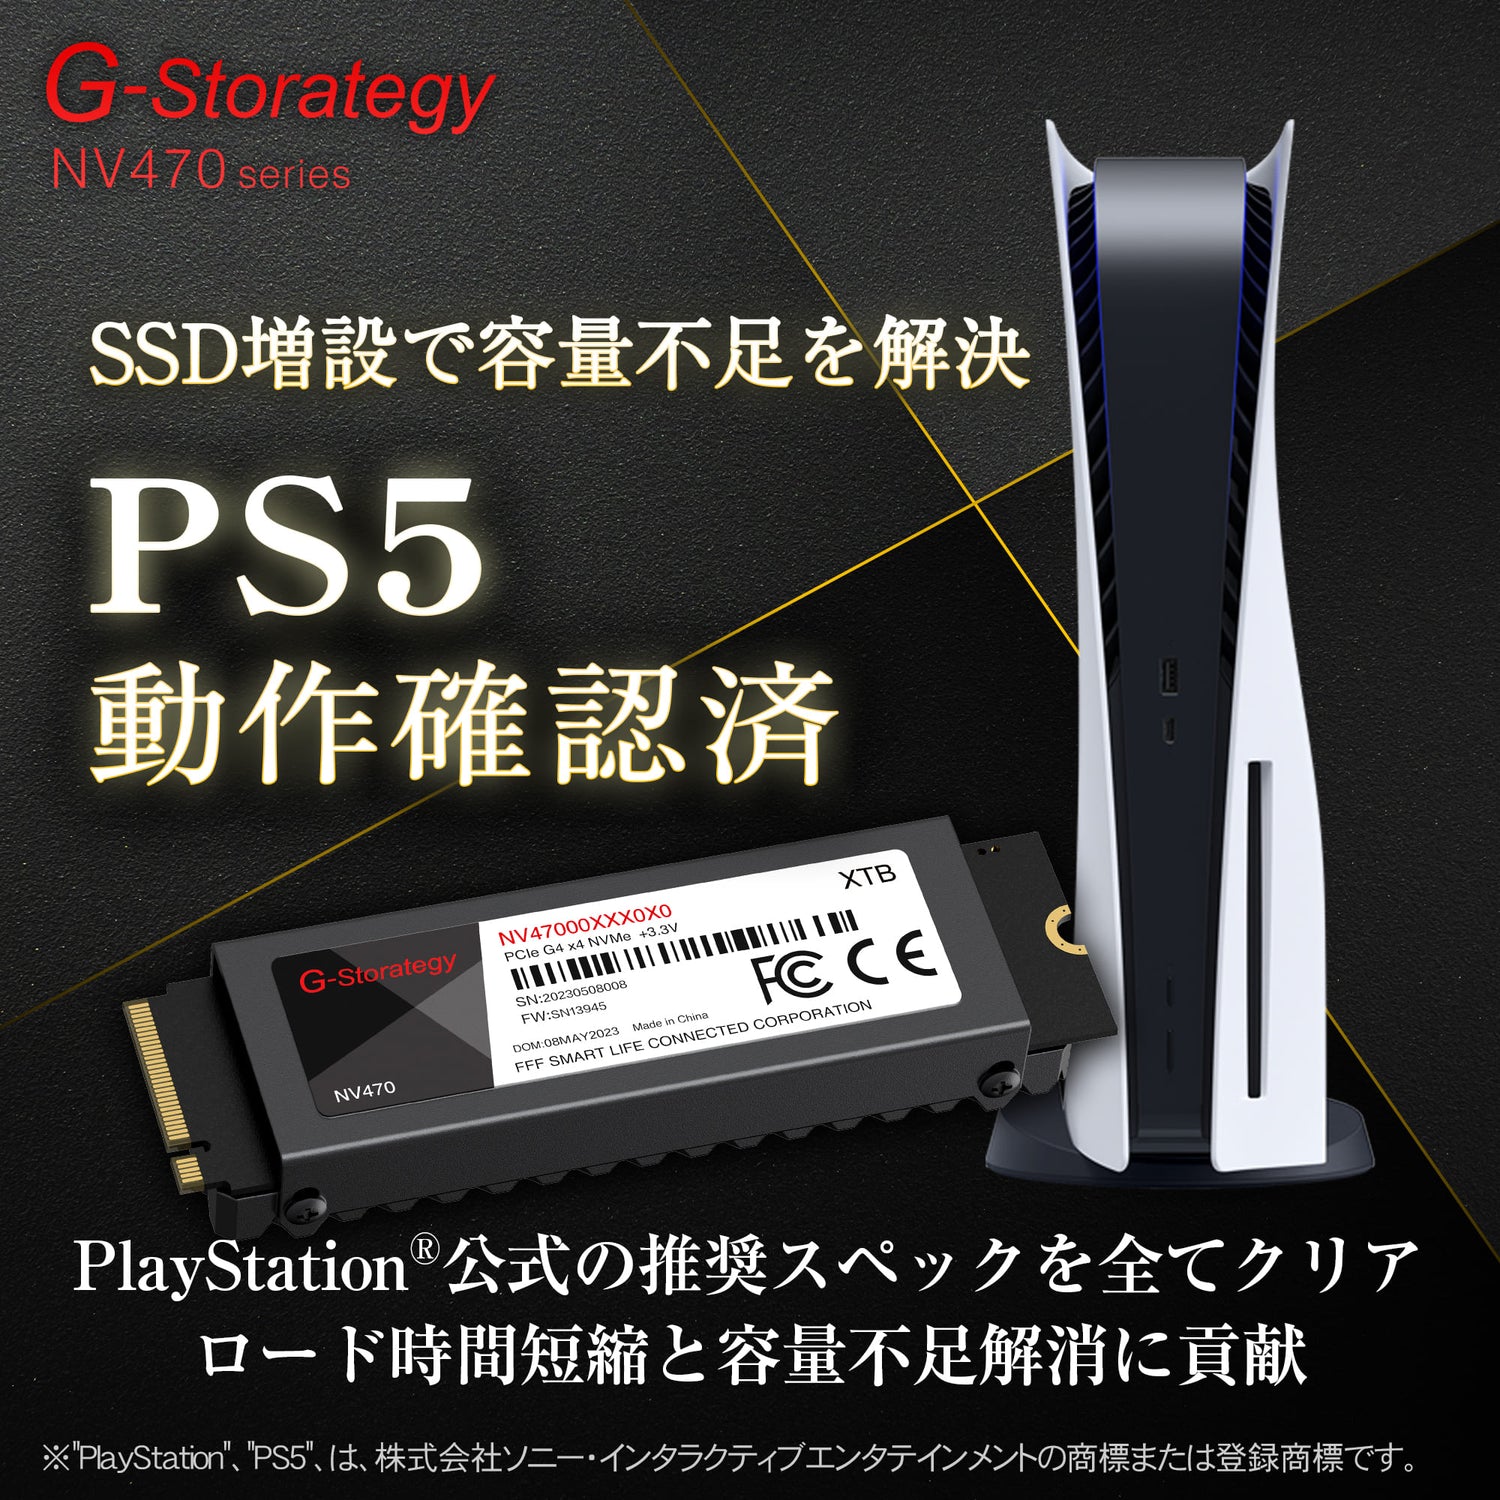 G-Storategy SSD ヒートシンク付き 1TB PS5対応 Gen4×4 最大読込:7450MB/s 最大書込:6600MB/s 5年保証 NV47001TBY3G1